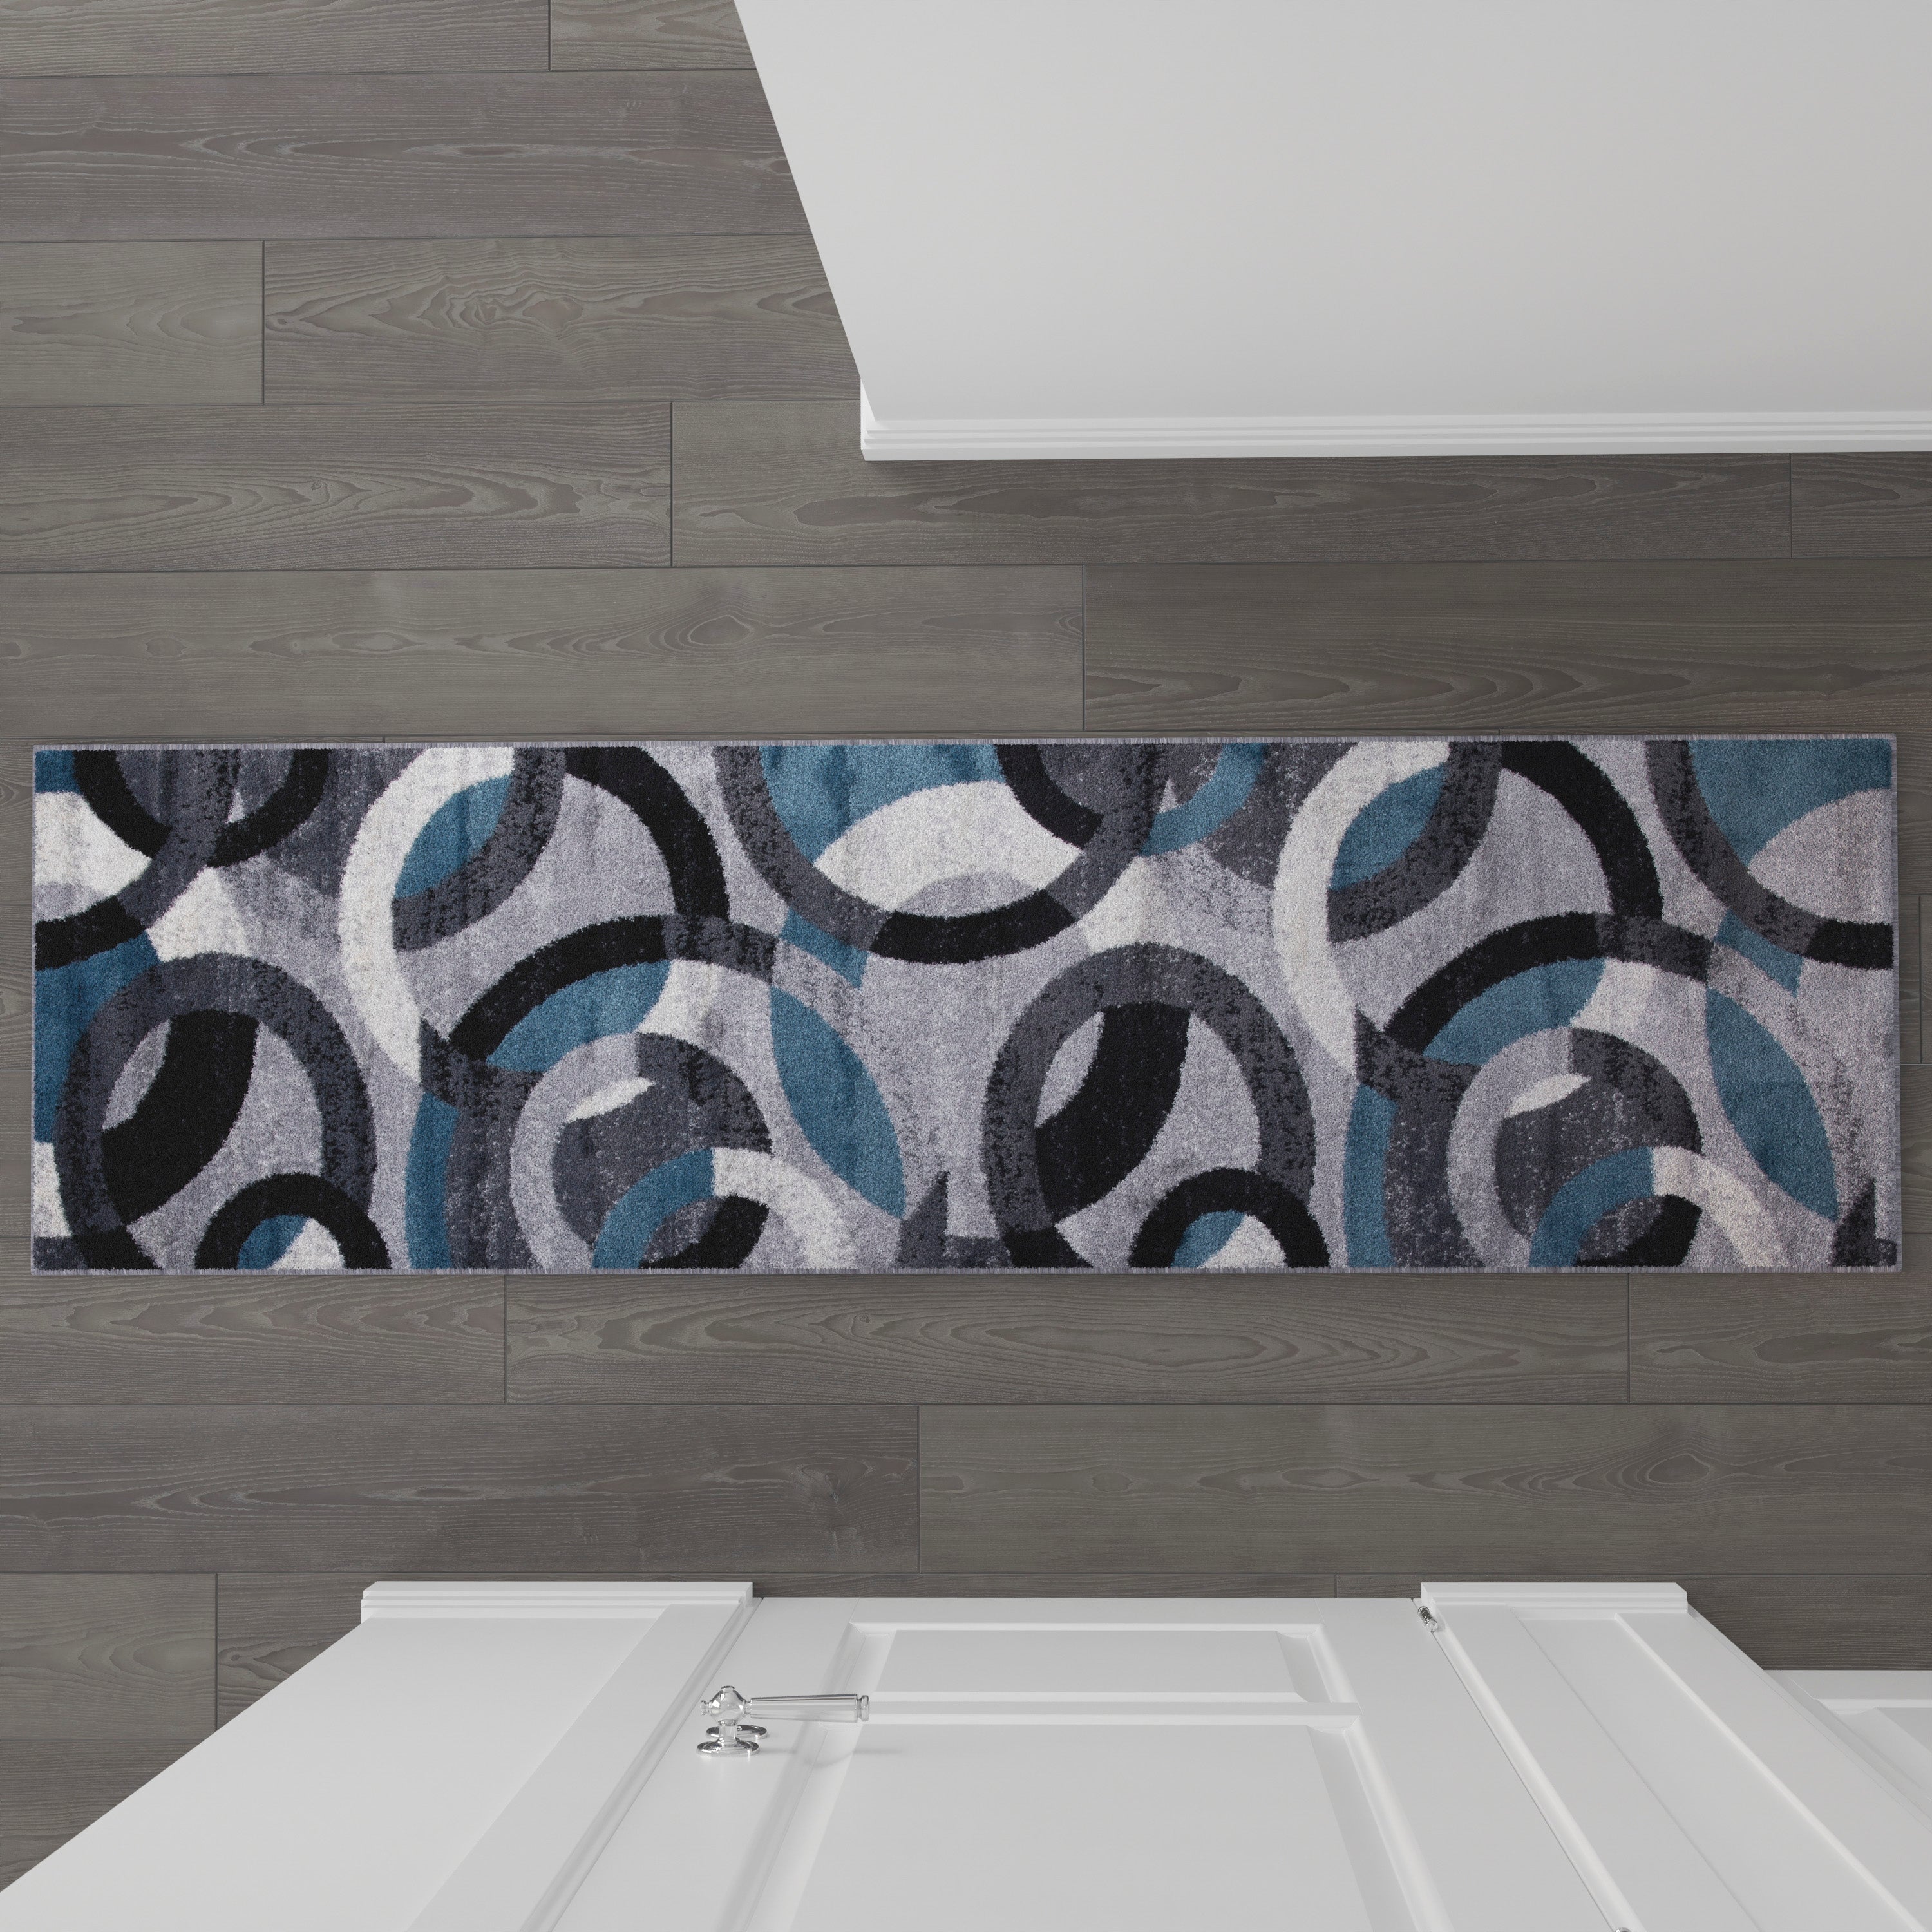 Harken Collection Geometric Olefin Area Rug with Jute Backing, Living Room, Bedroom-Indoor Area Rug-Flash Furniture-Wall2Wall Furnishings